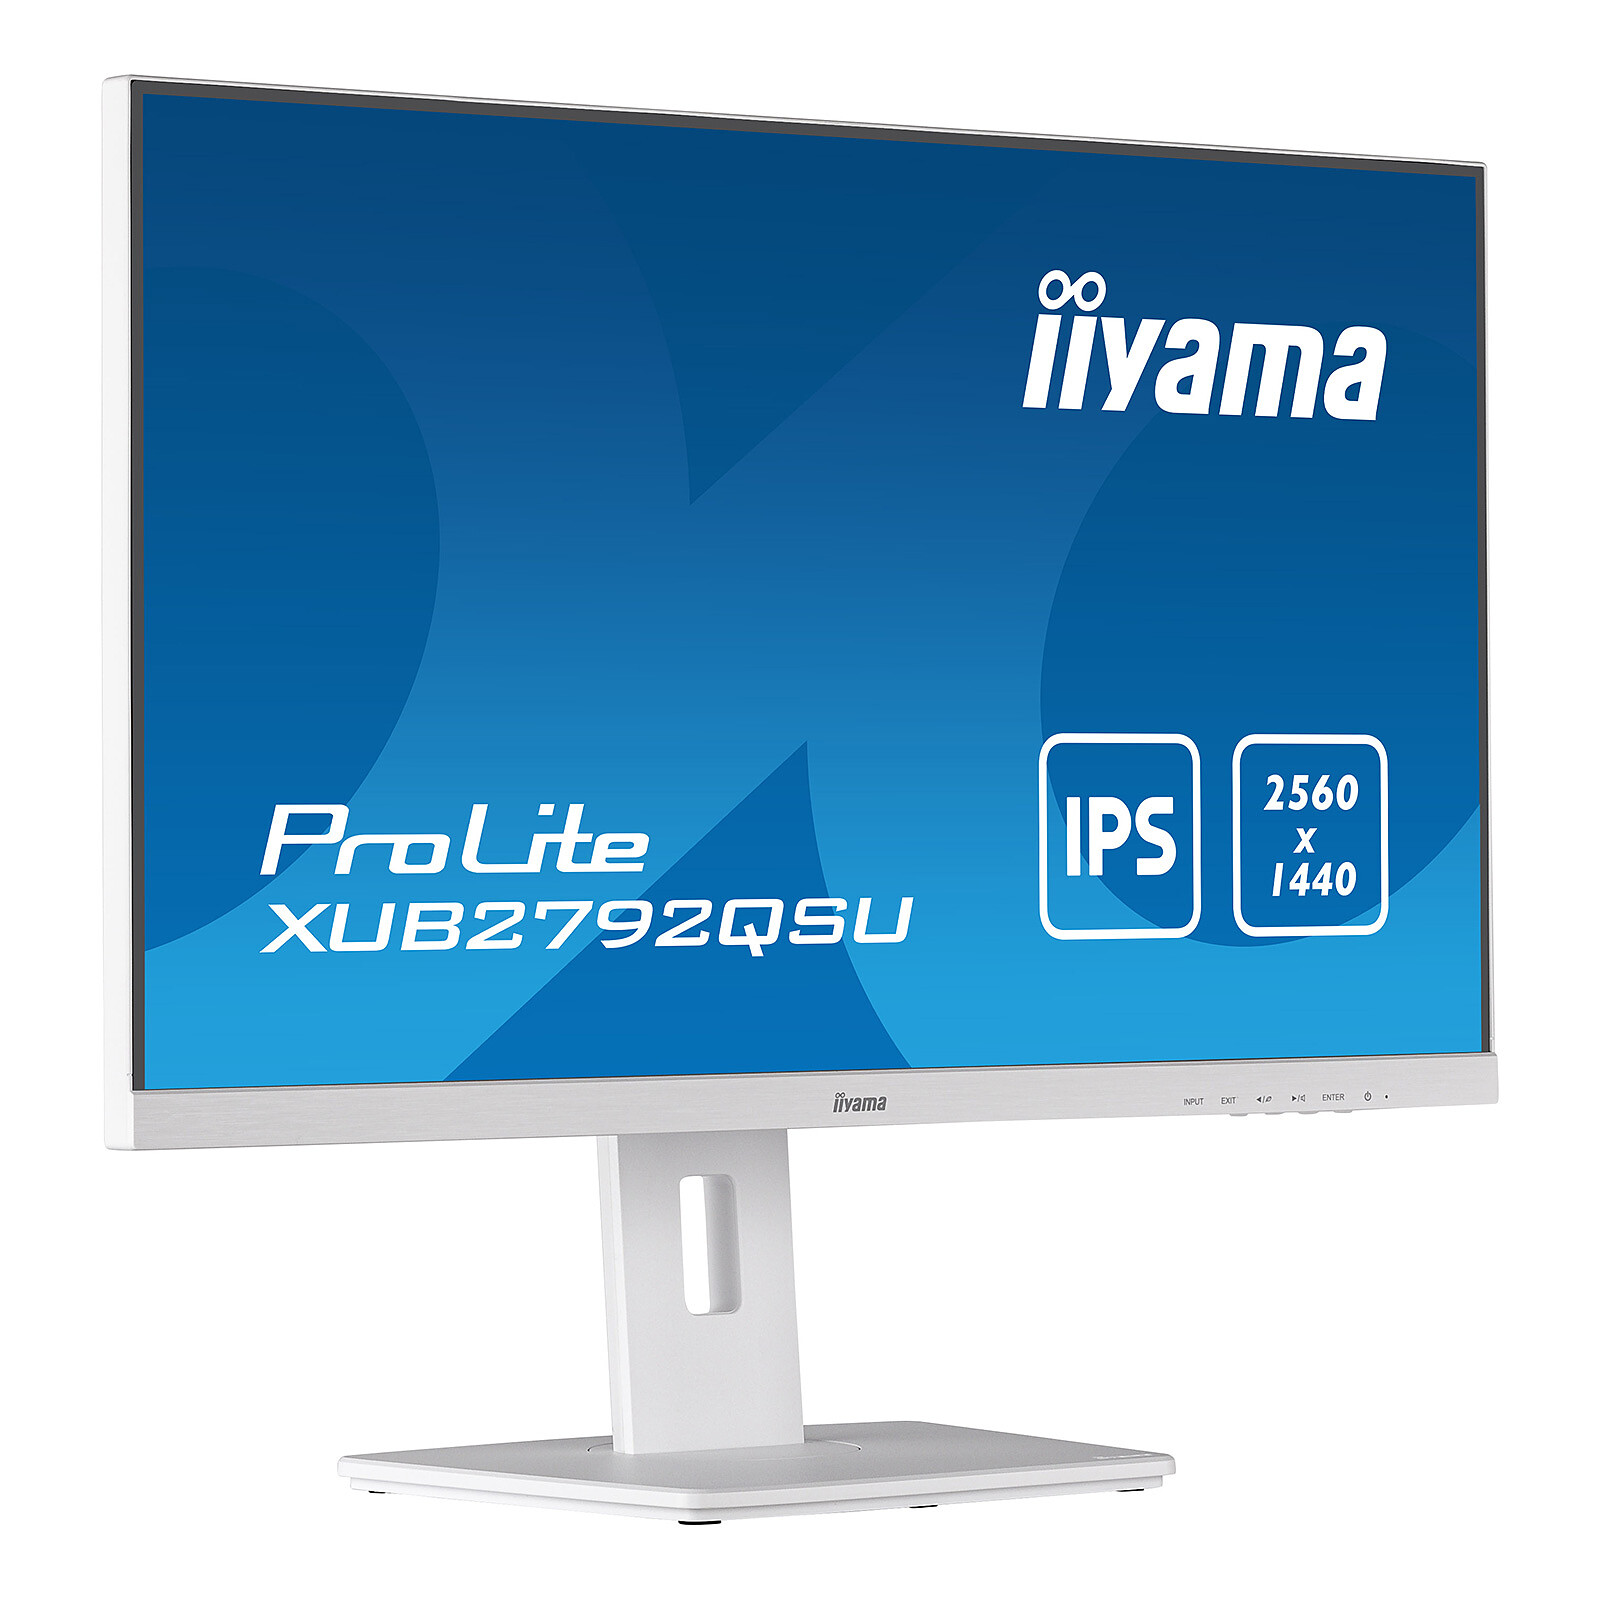 iiyama 32 LED - ProLite XB3270QS-B1 - Ecran PC - Garantie 3 ans LDLC